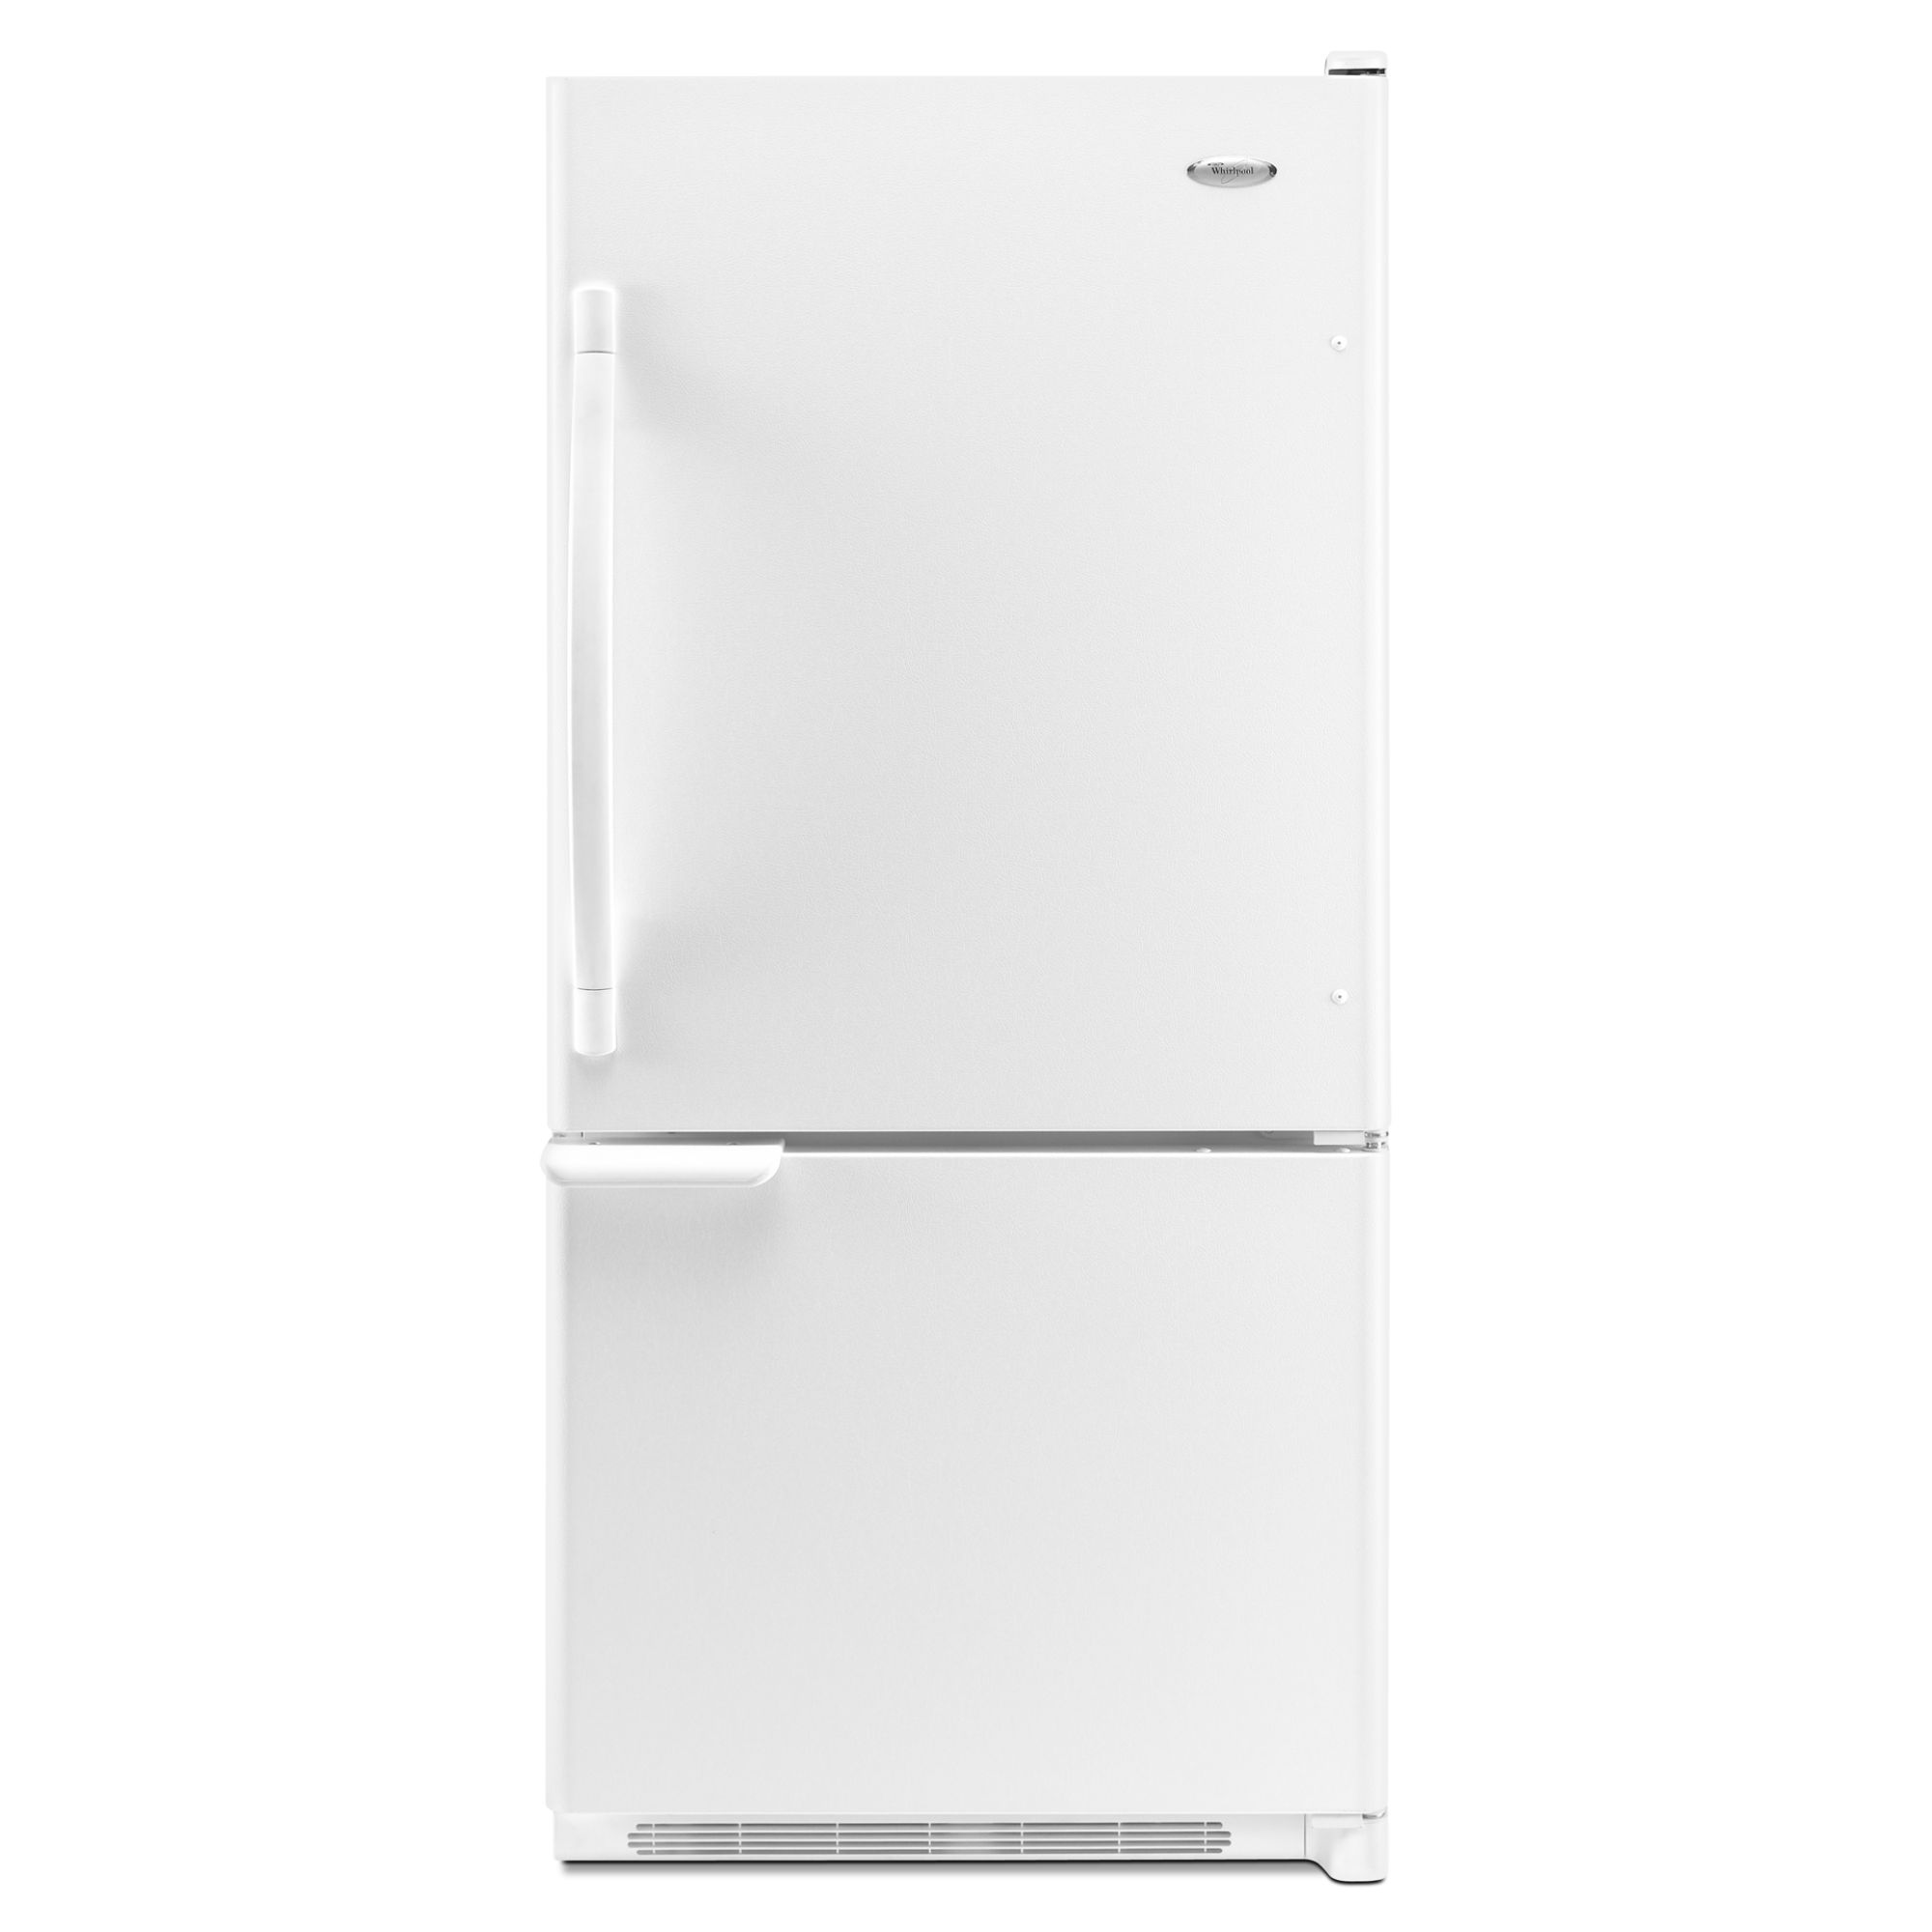 Whirlpool 18.5 cu. ft. Single-Door Bottom-Freezer Refrigerator - White